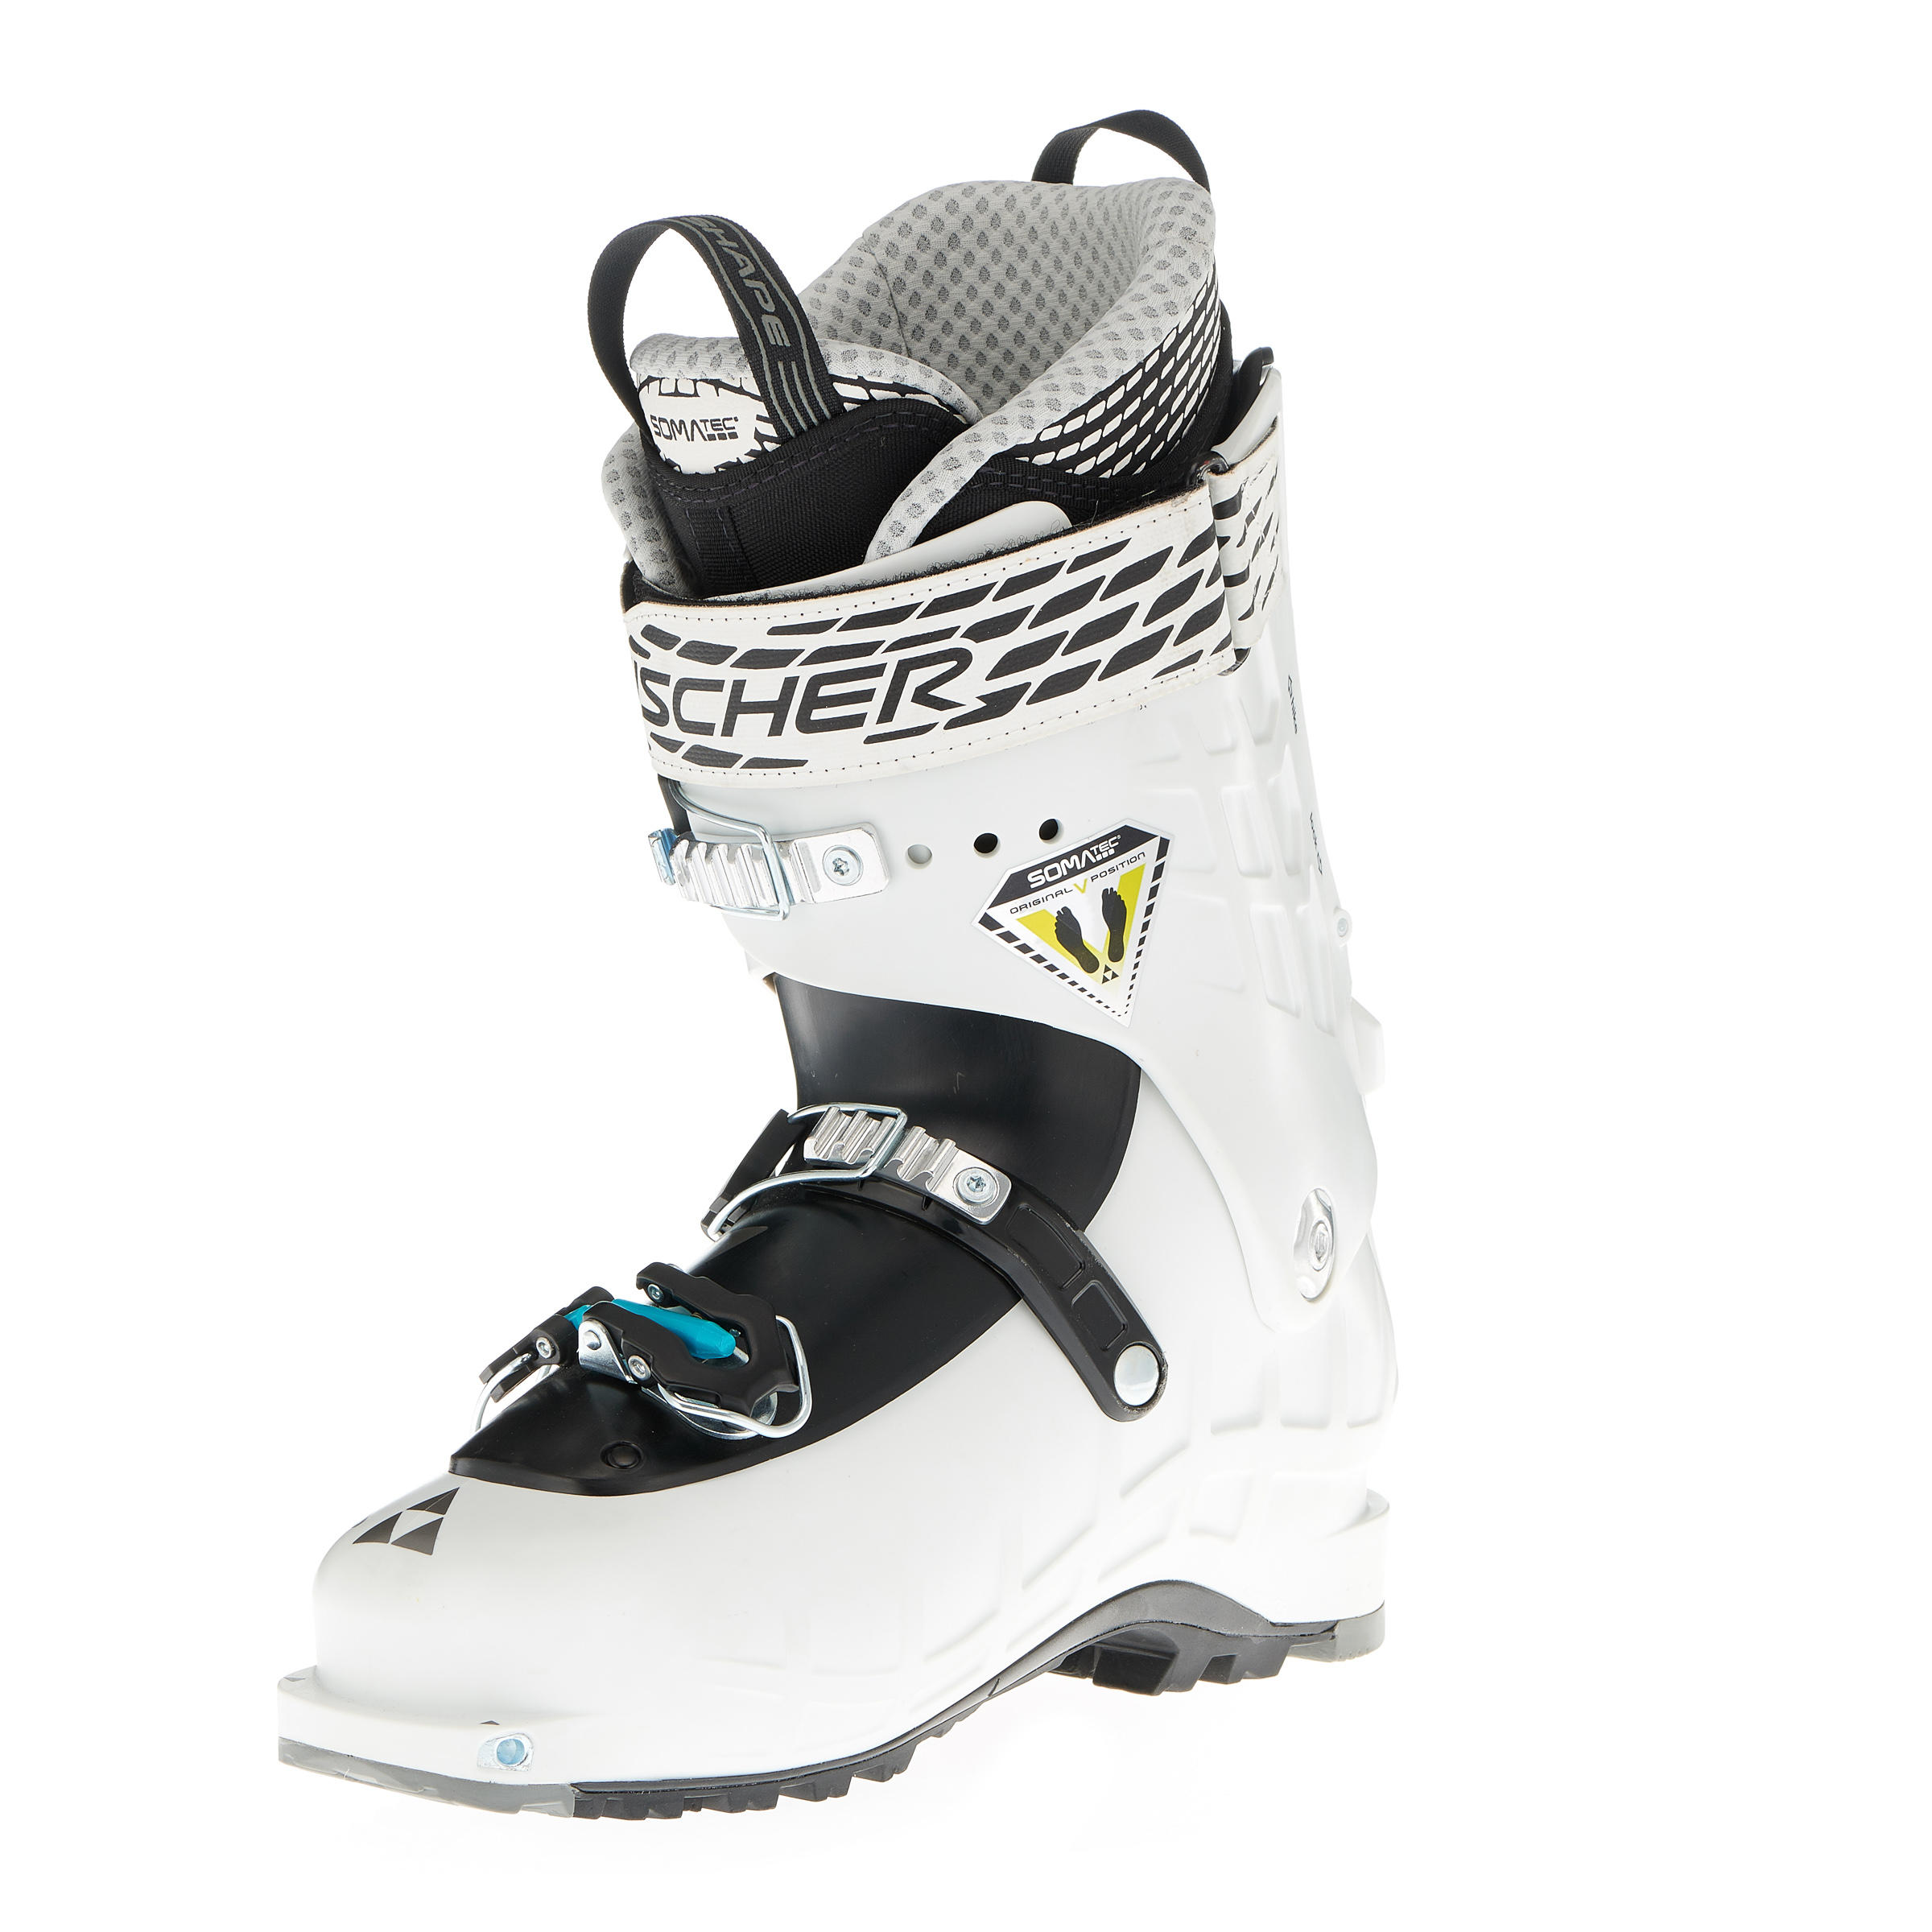 Transalp Women's Cross-Country Skiing Boots 2/15